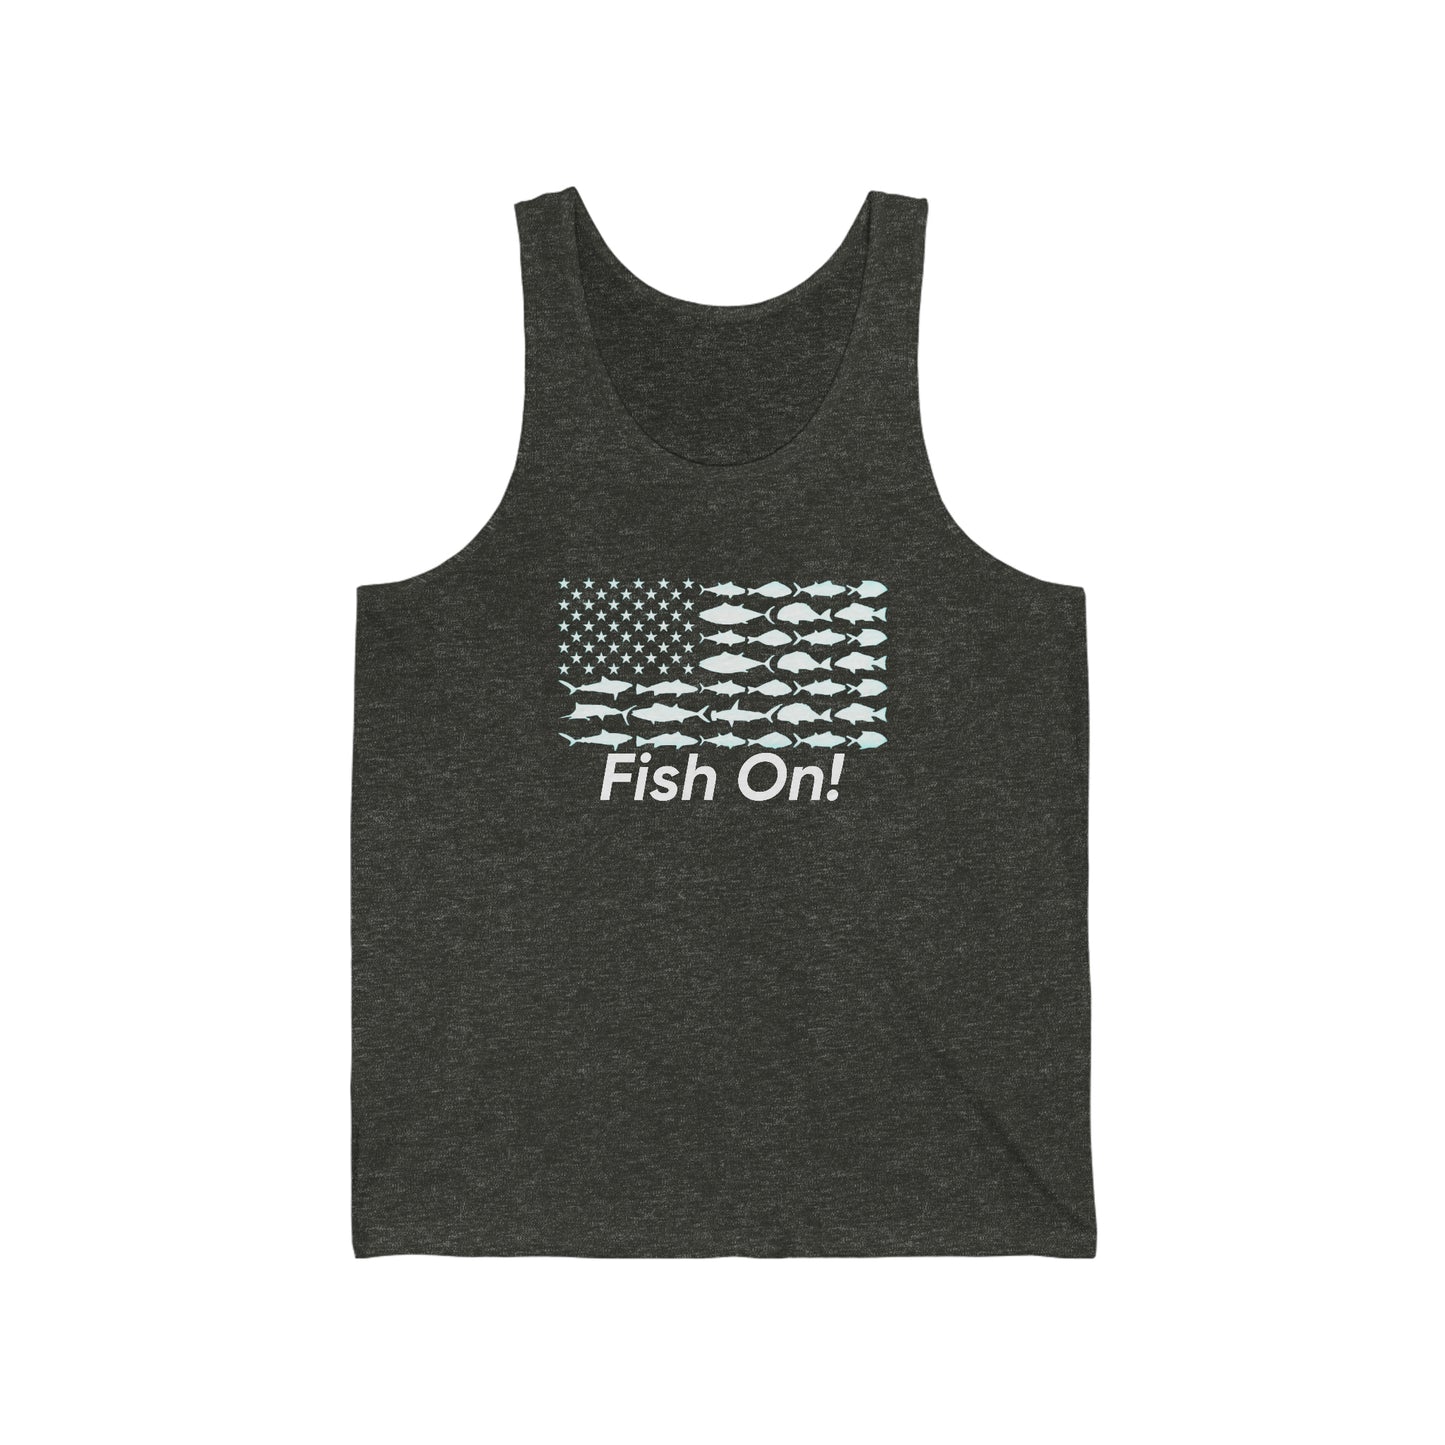 Fish On! Tank Top - Backwoods Branding Co.